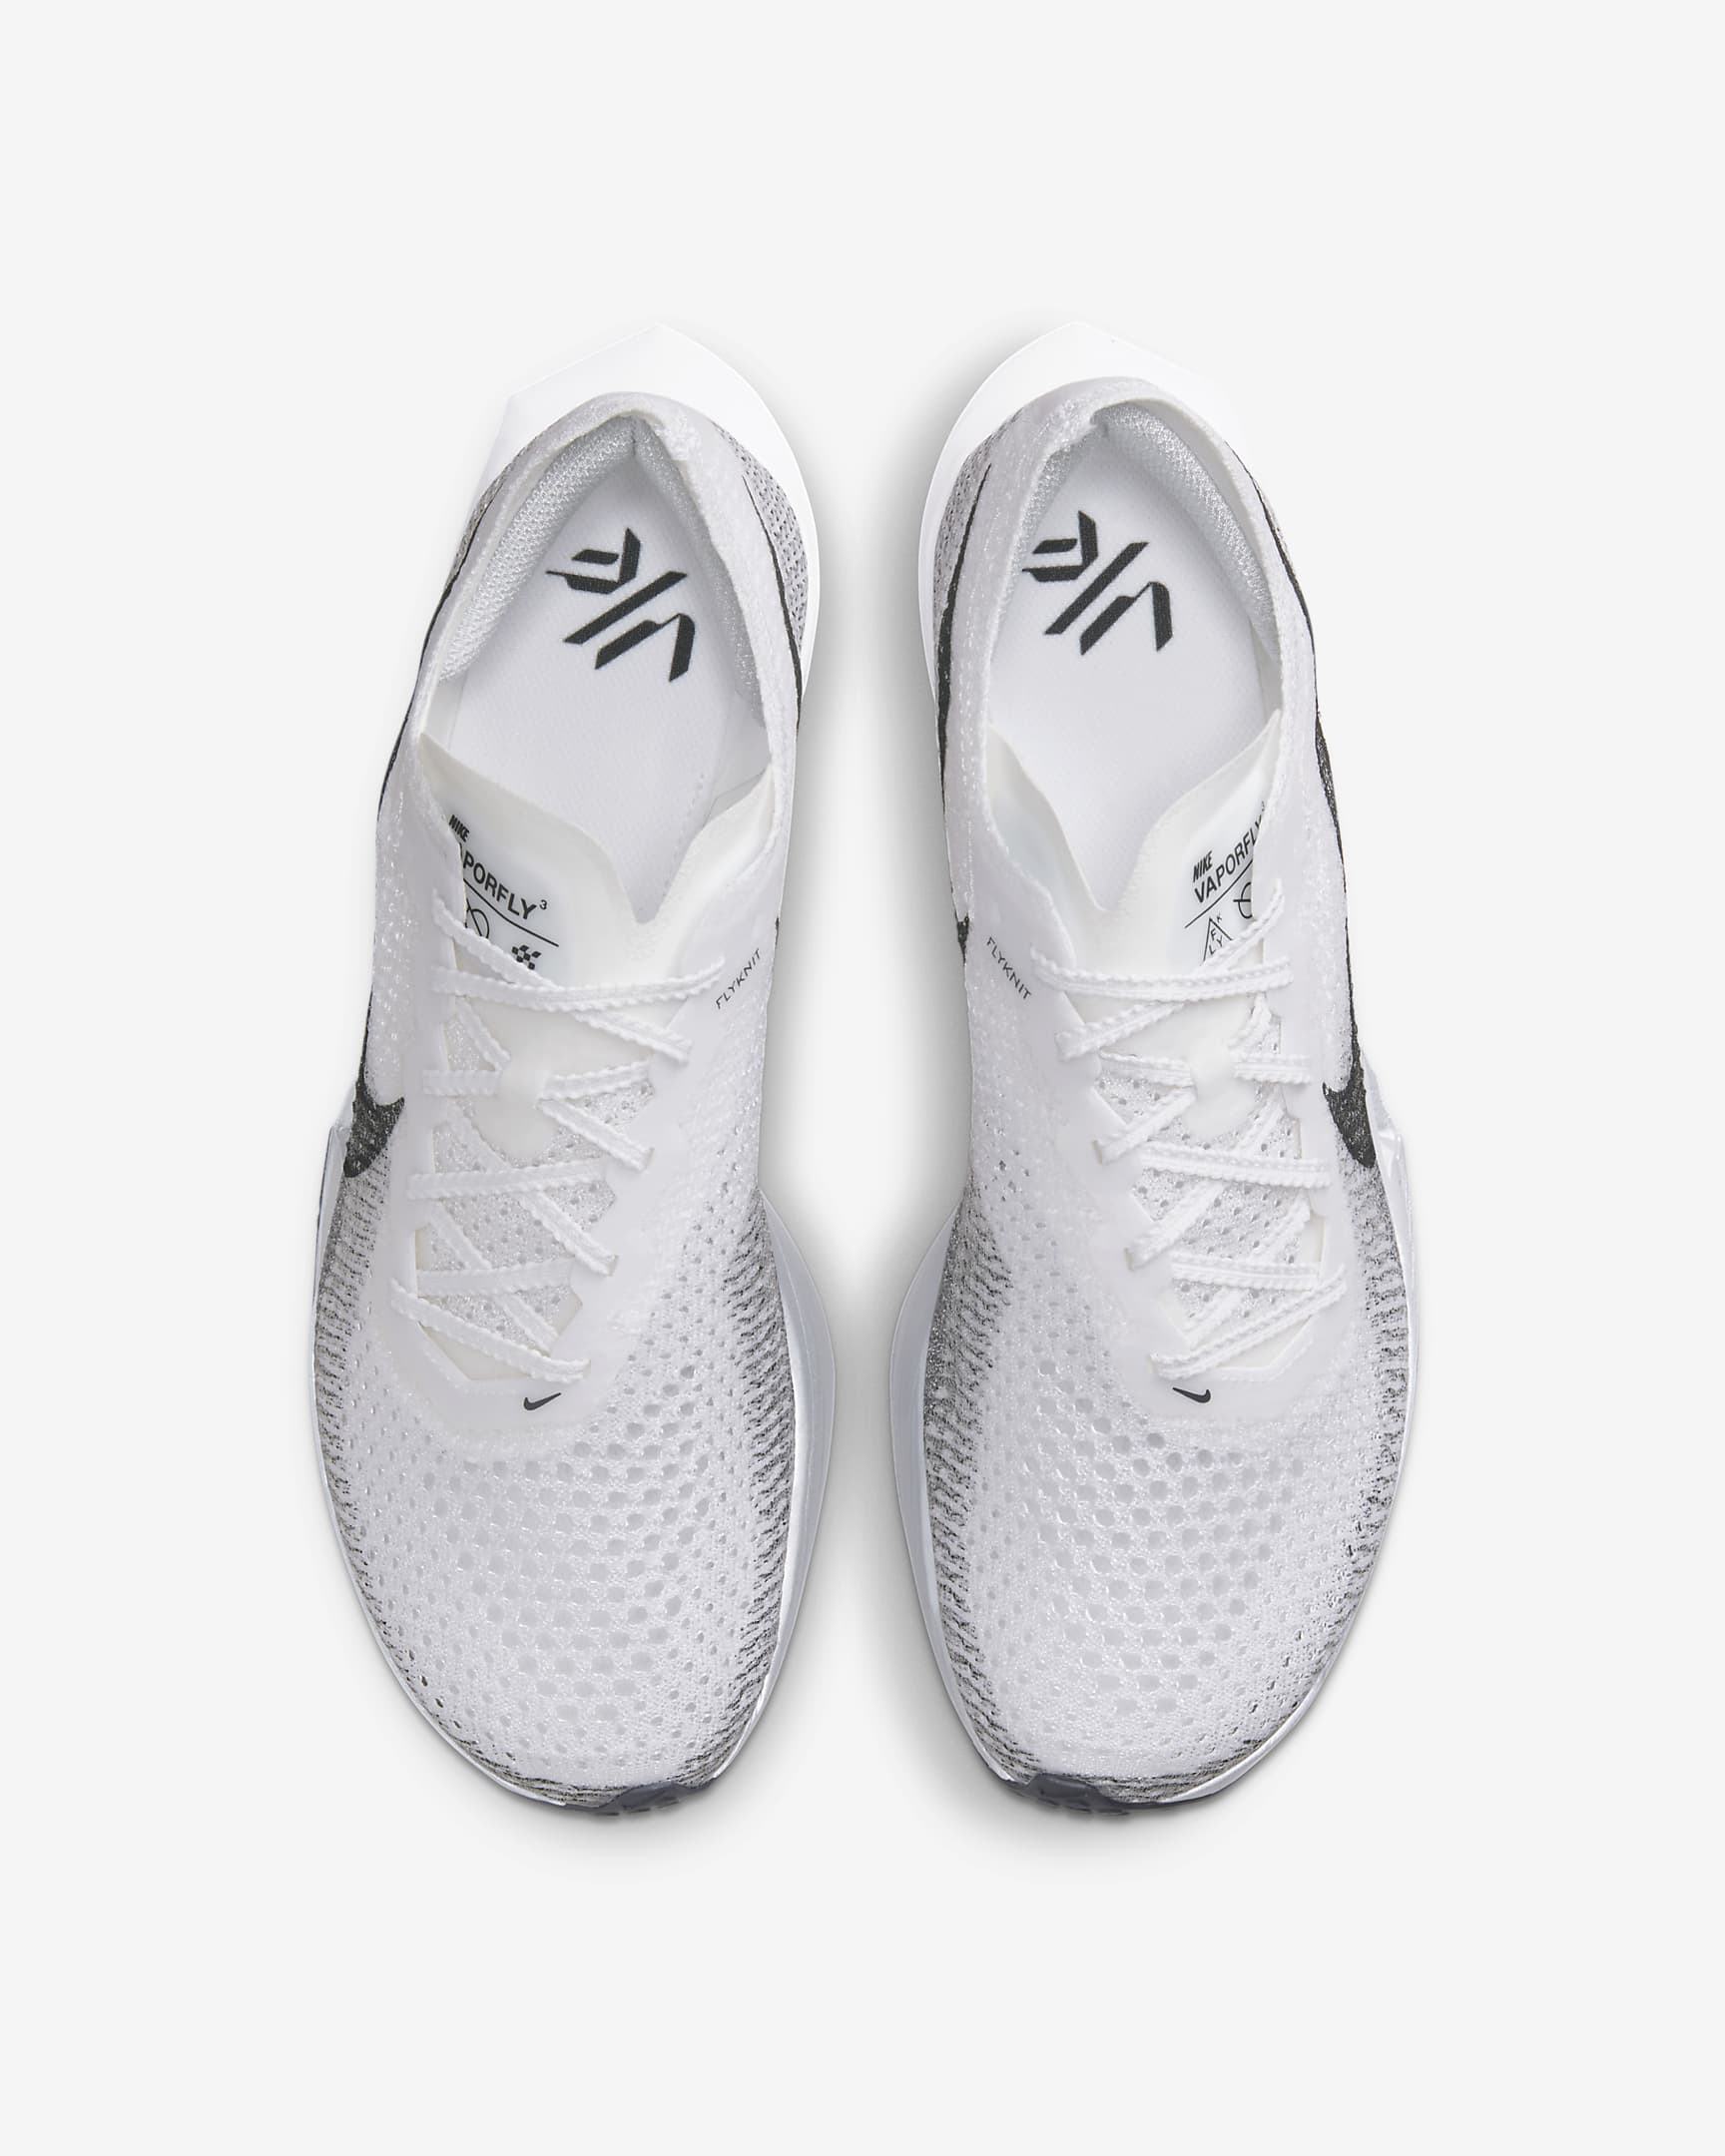 Nike Vaporfly 3 Women's Road Racing Shoes - White/Particle Grey/Metallic Silver/Dark Smoke Grey